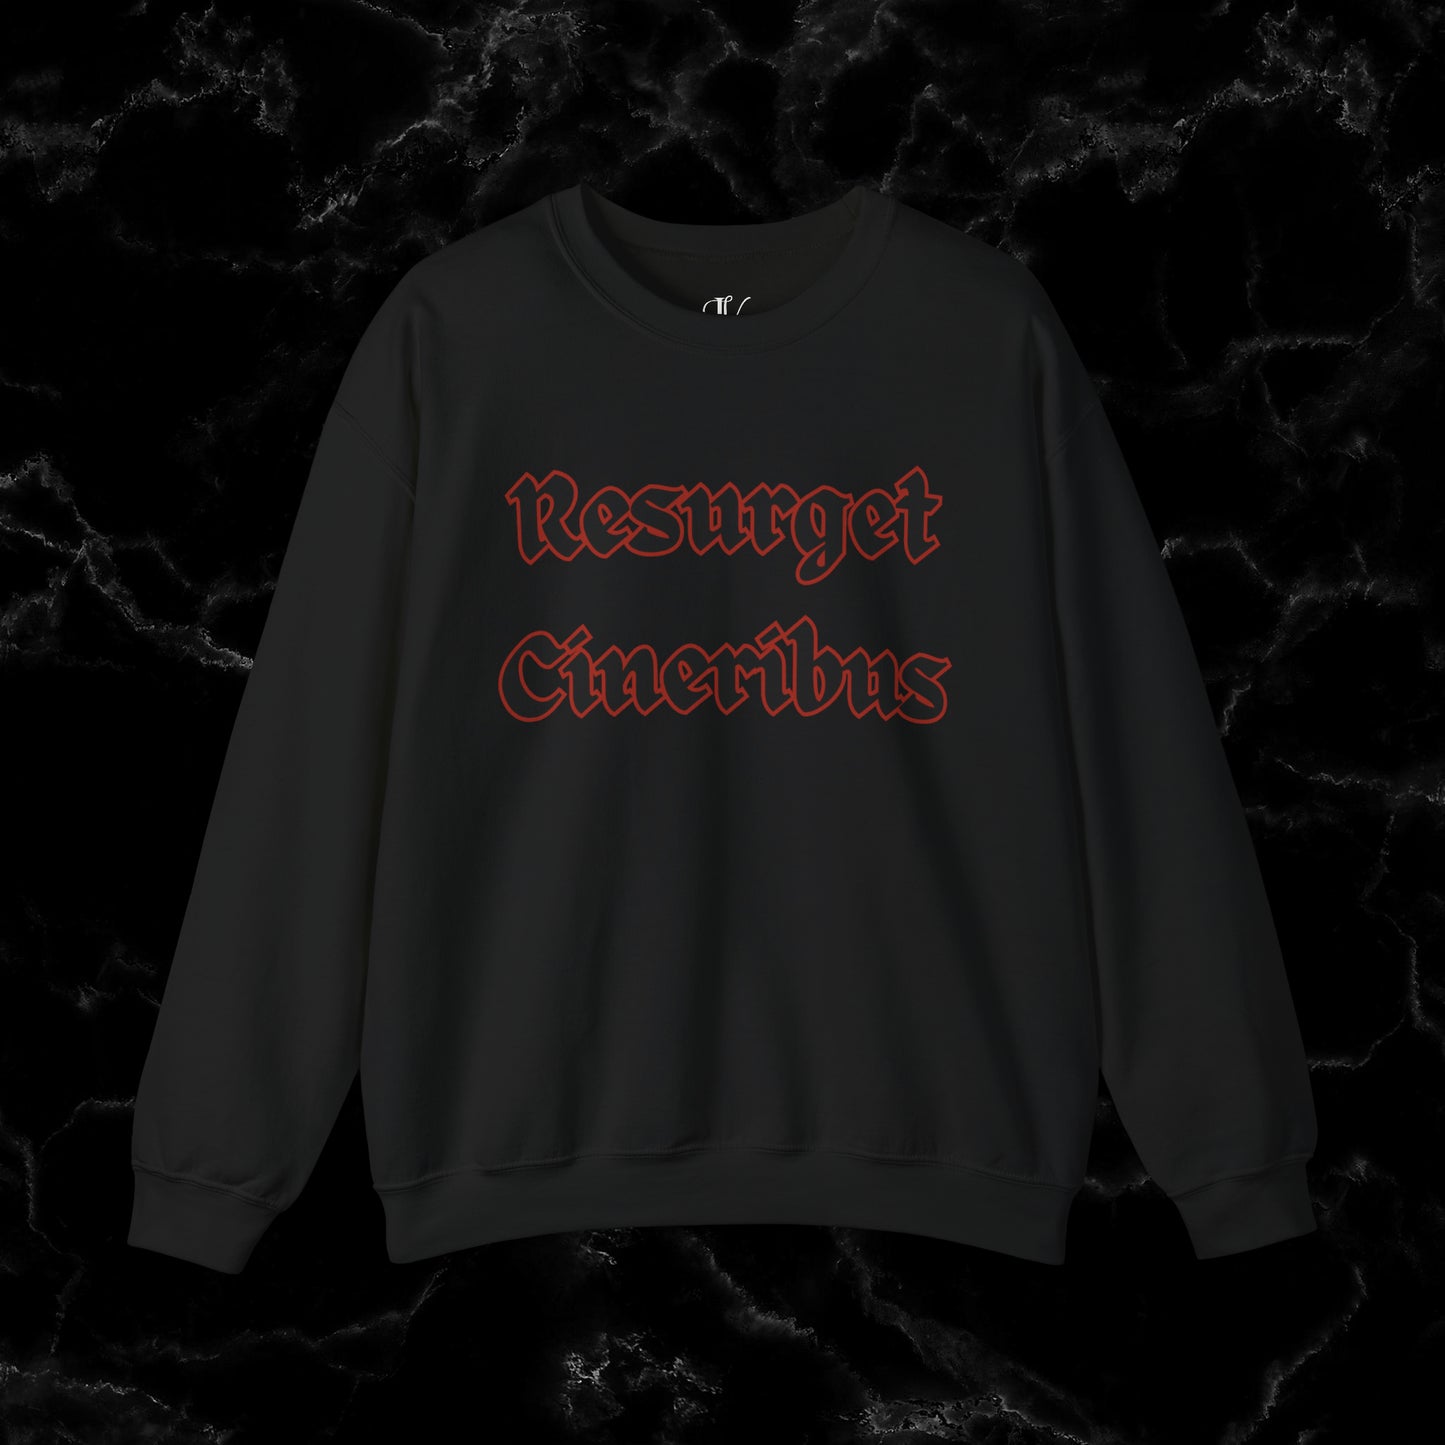 Resurget Cineribus Unisex Crewneck Sweatshirt - Latin Inspirational Gifts for Sports Football Fans Sweatshirt S Black 